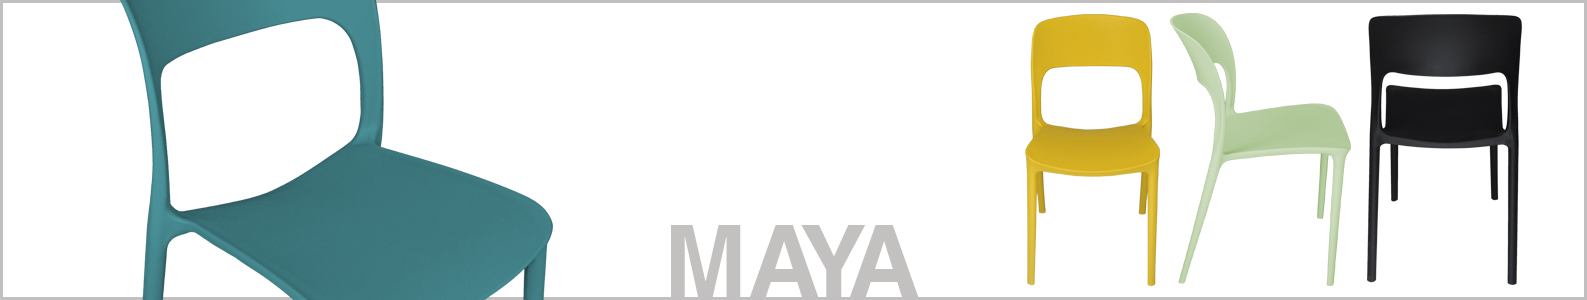 Sedia impilabile in polipropilene bianca mod. Maya Arredo